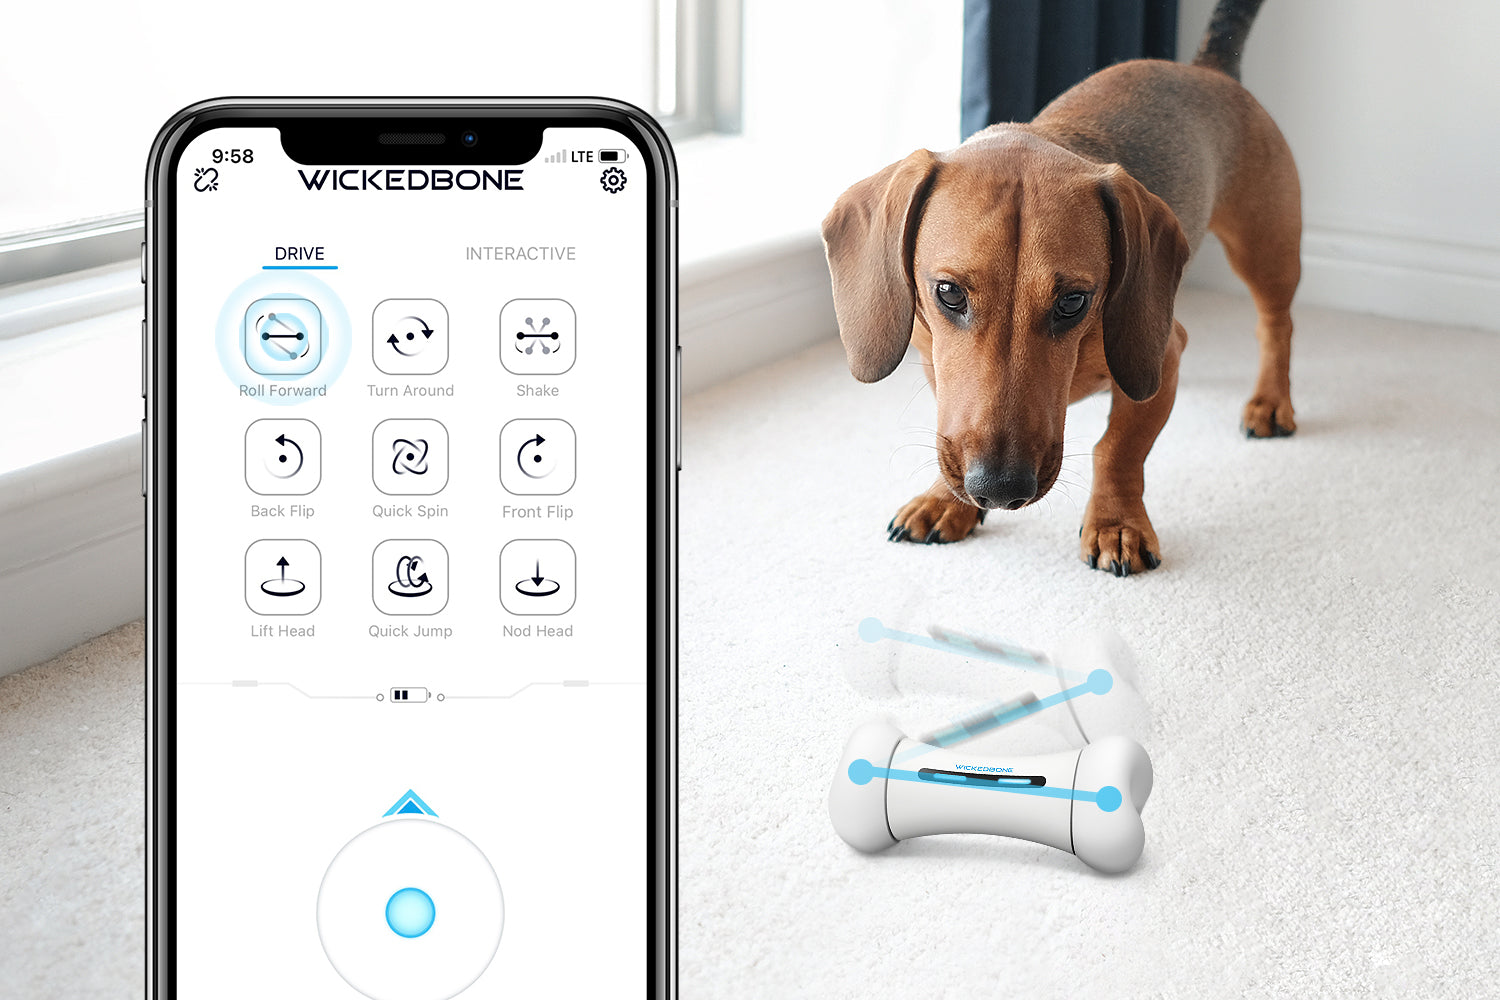 WICKEDBONE: World's First Smart & Interactive Dog Toy by Cheerble